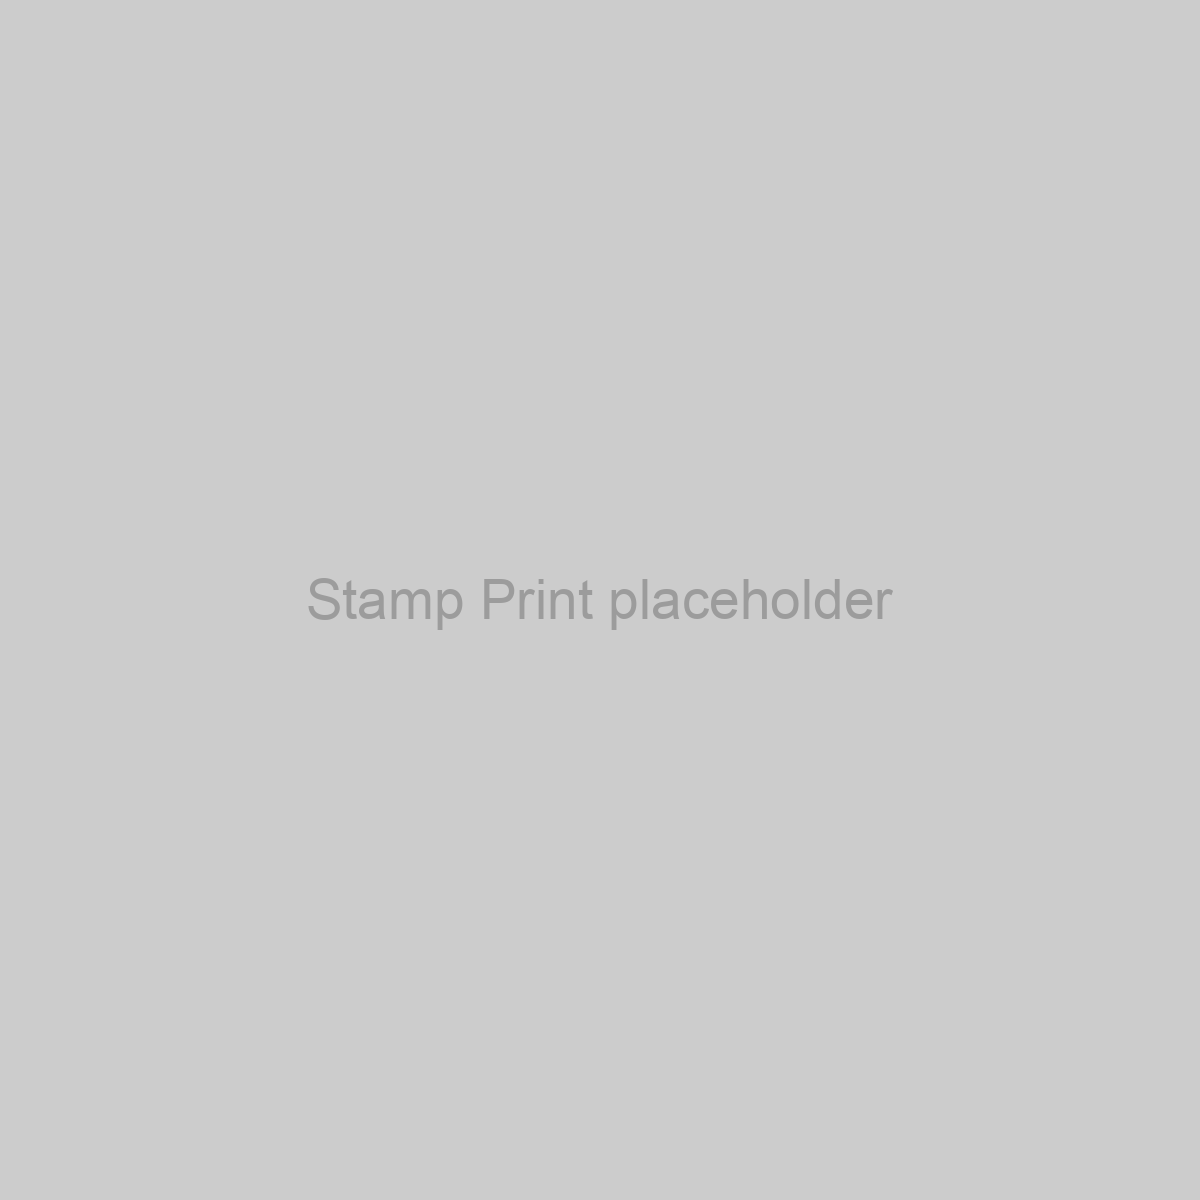 Stamp Print Placeholder Image